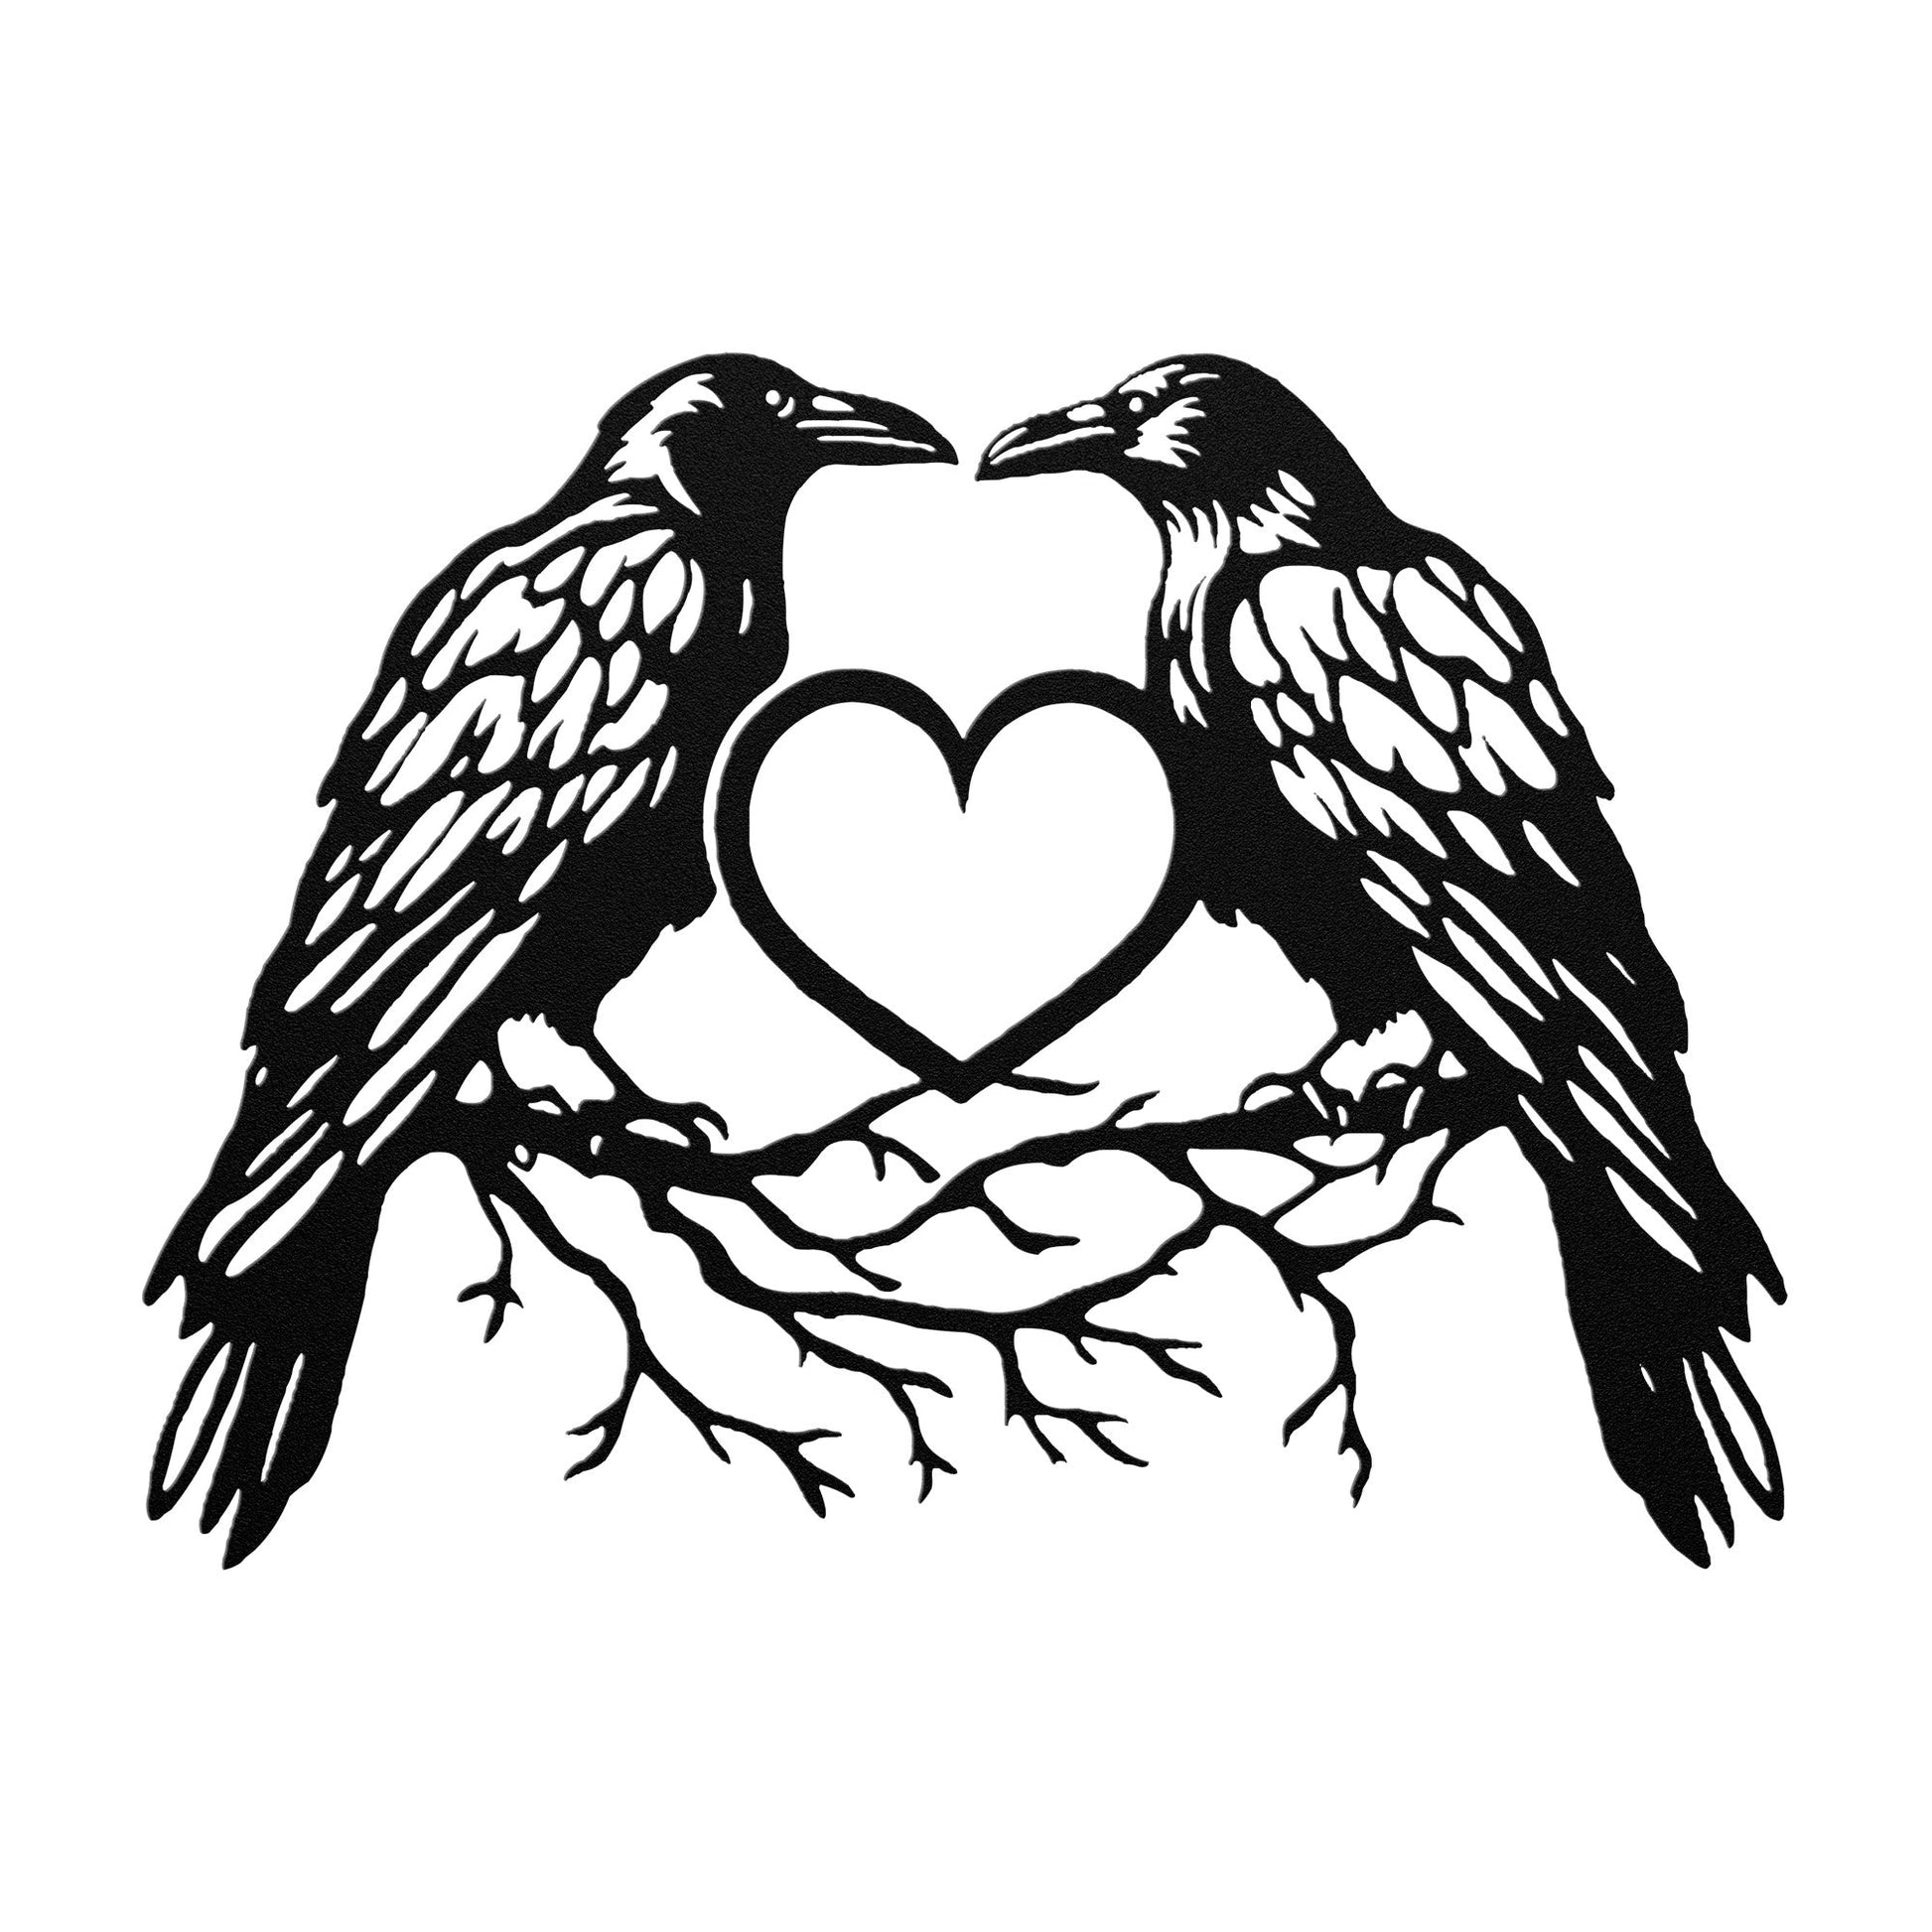 Two Ravens In Love Metal SignWall ArtVTZdesignsBlack12 InchArt & Wall Decorbranchescrow